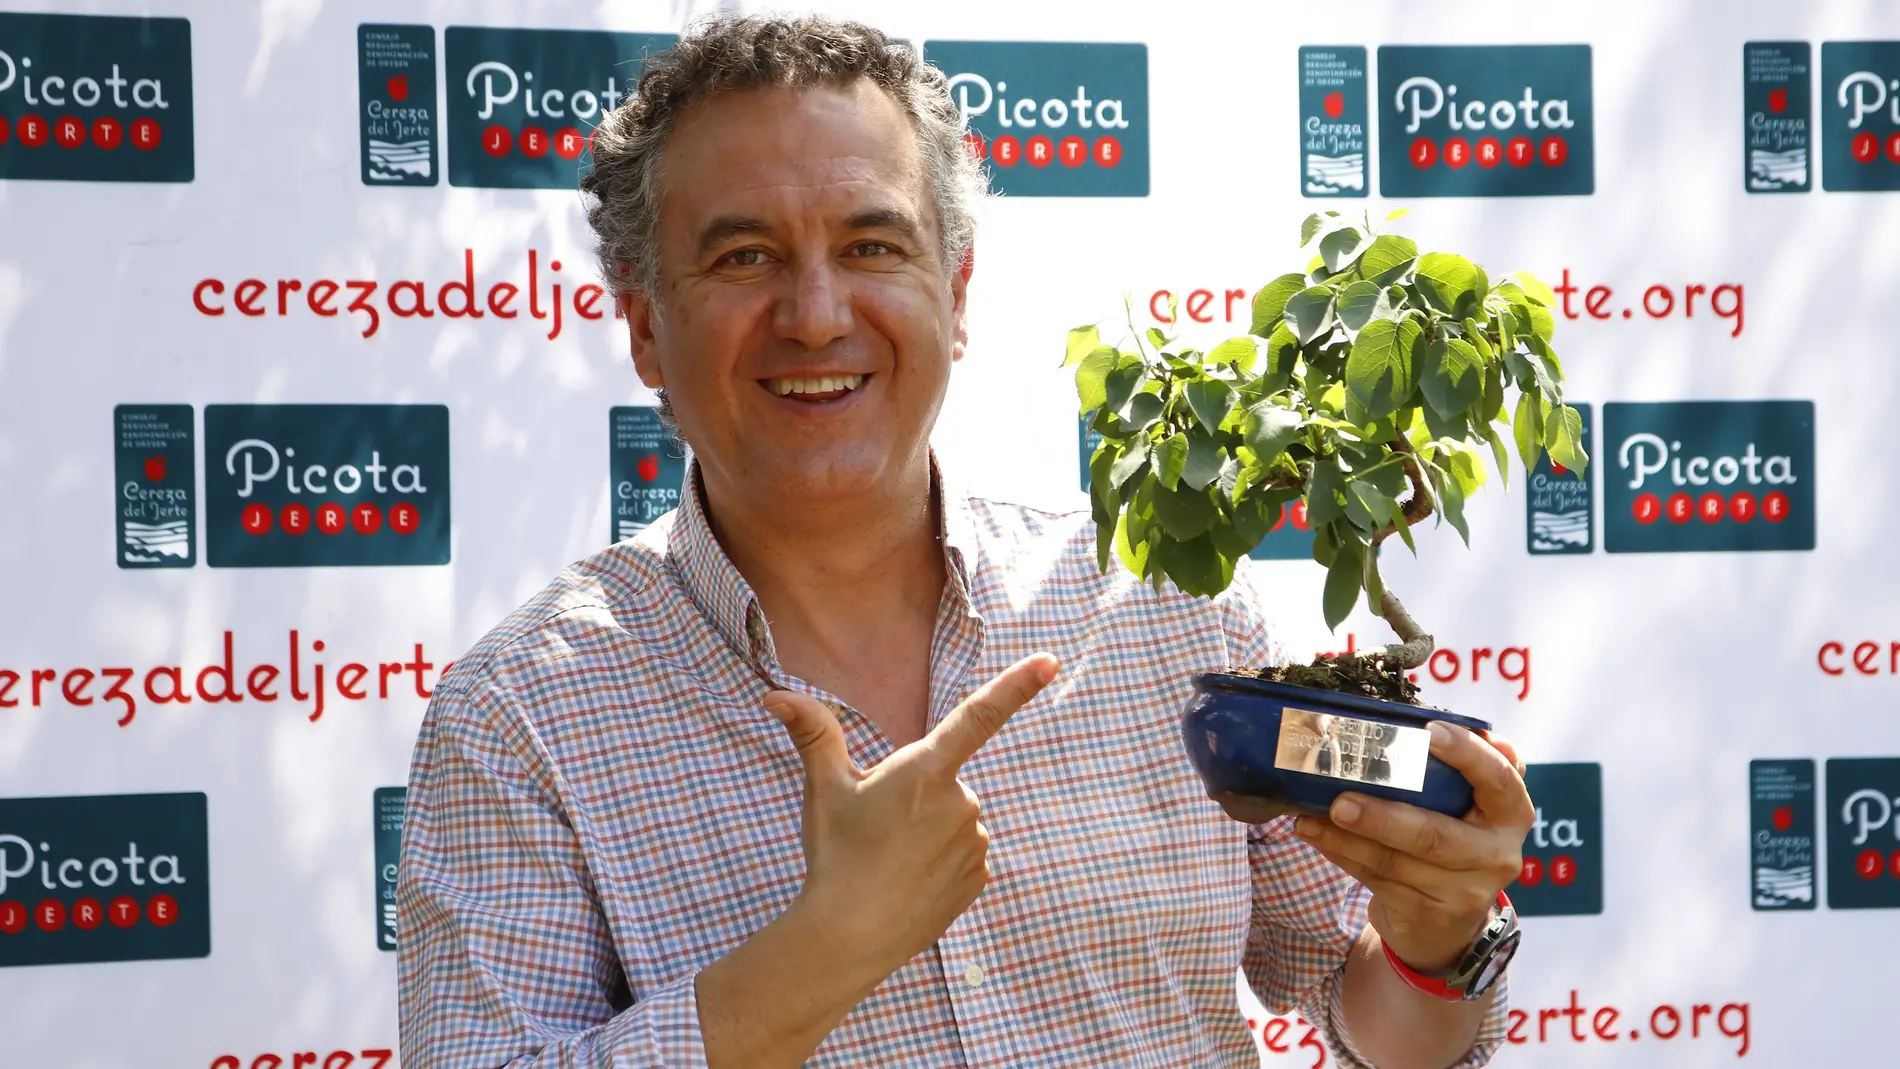 El periodista Roberto Brasero recibe el Premio a la Excelencia Picota del Jerte 2021